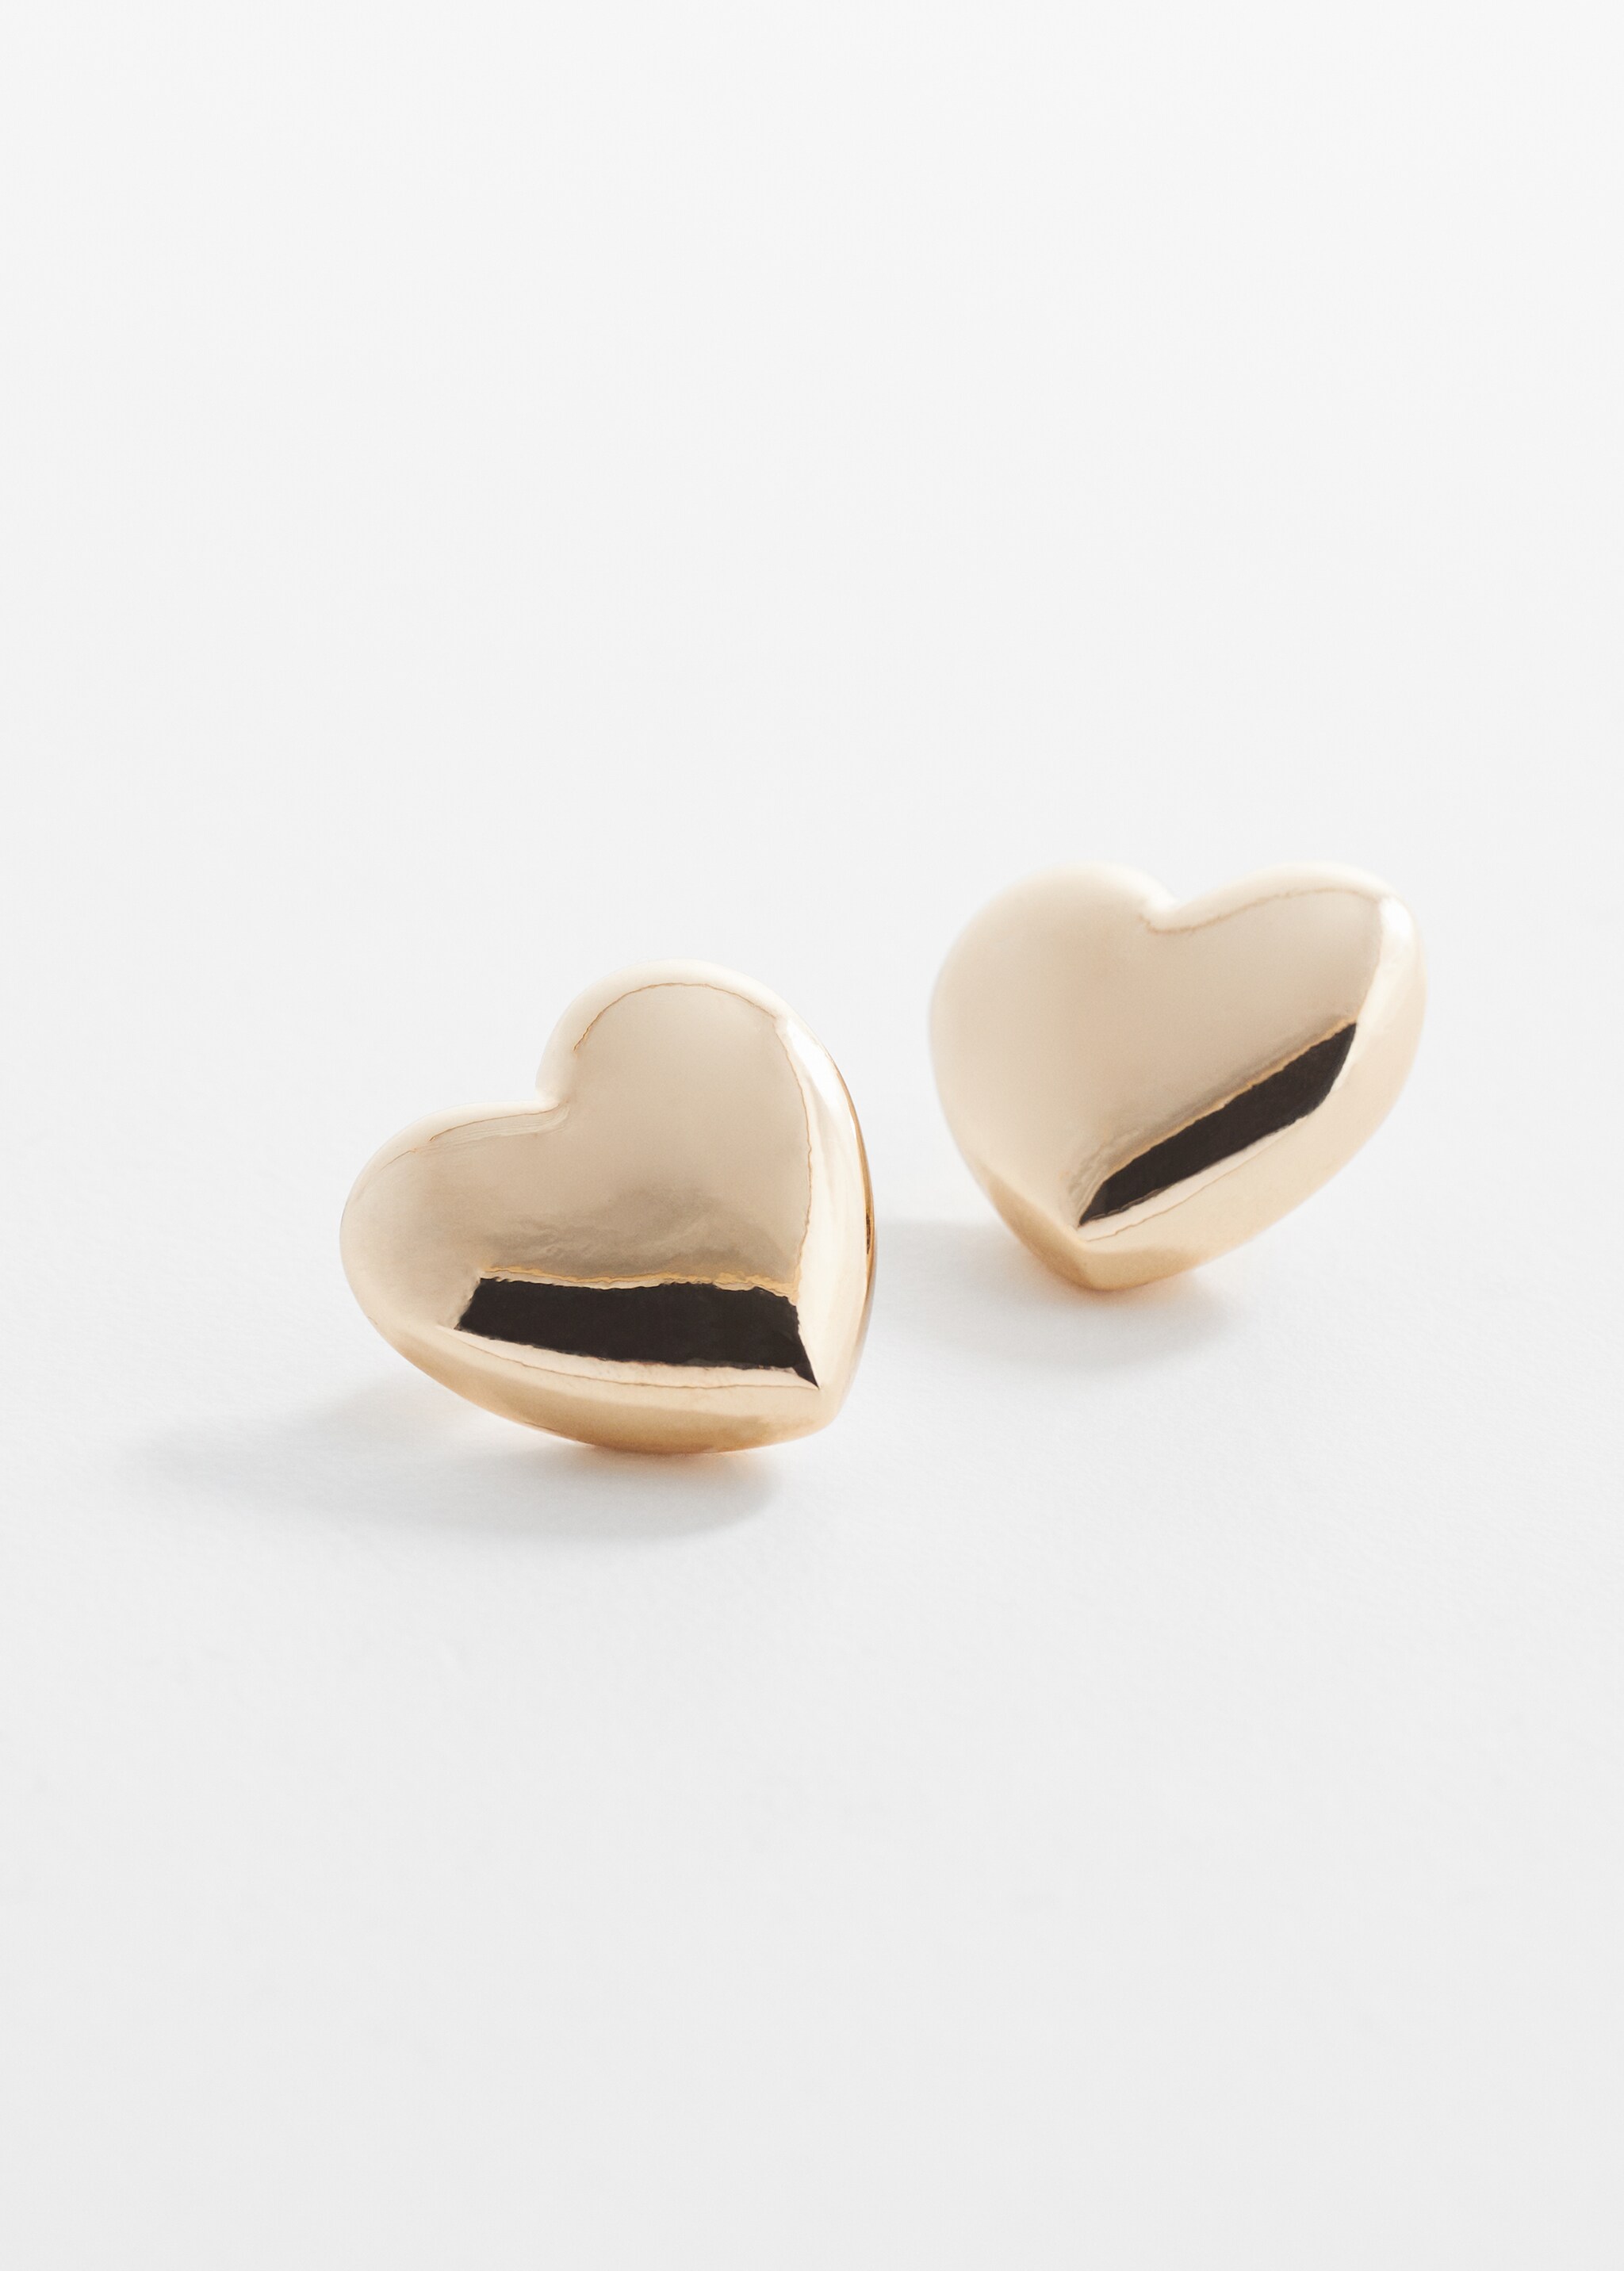 Heart-shape earrings - Medium plane